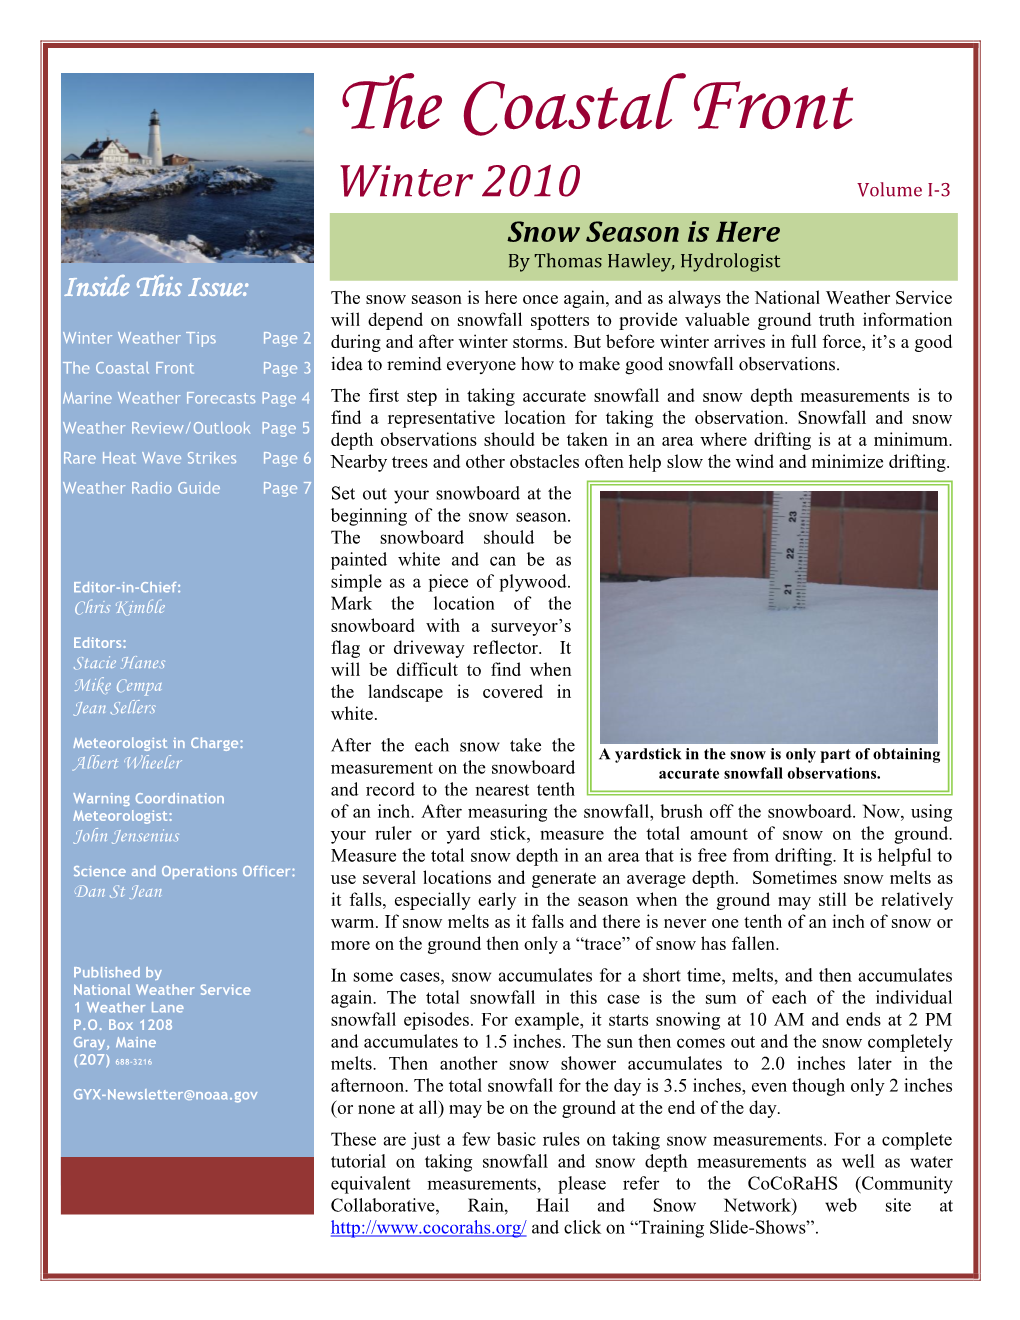 Winter 2010 Volume I-3 Snow Season Is Here by Thomas Hawley, Hydrologist